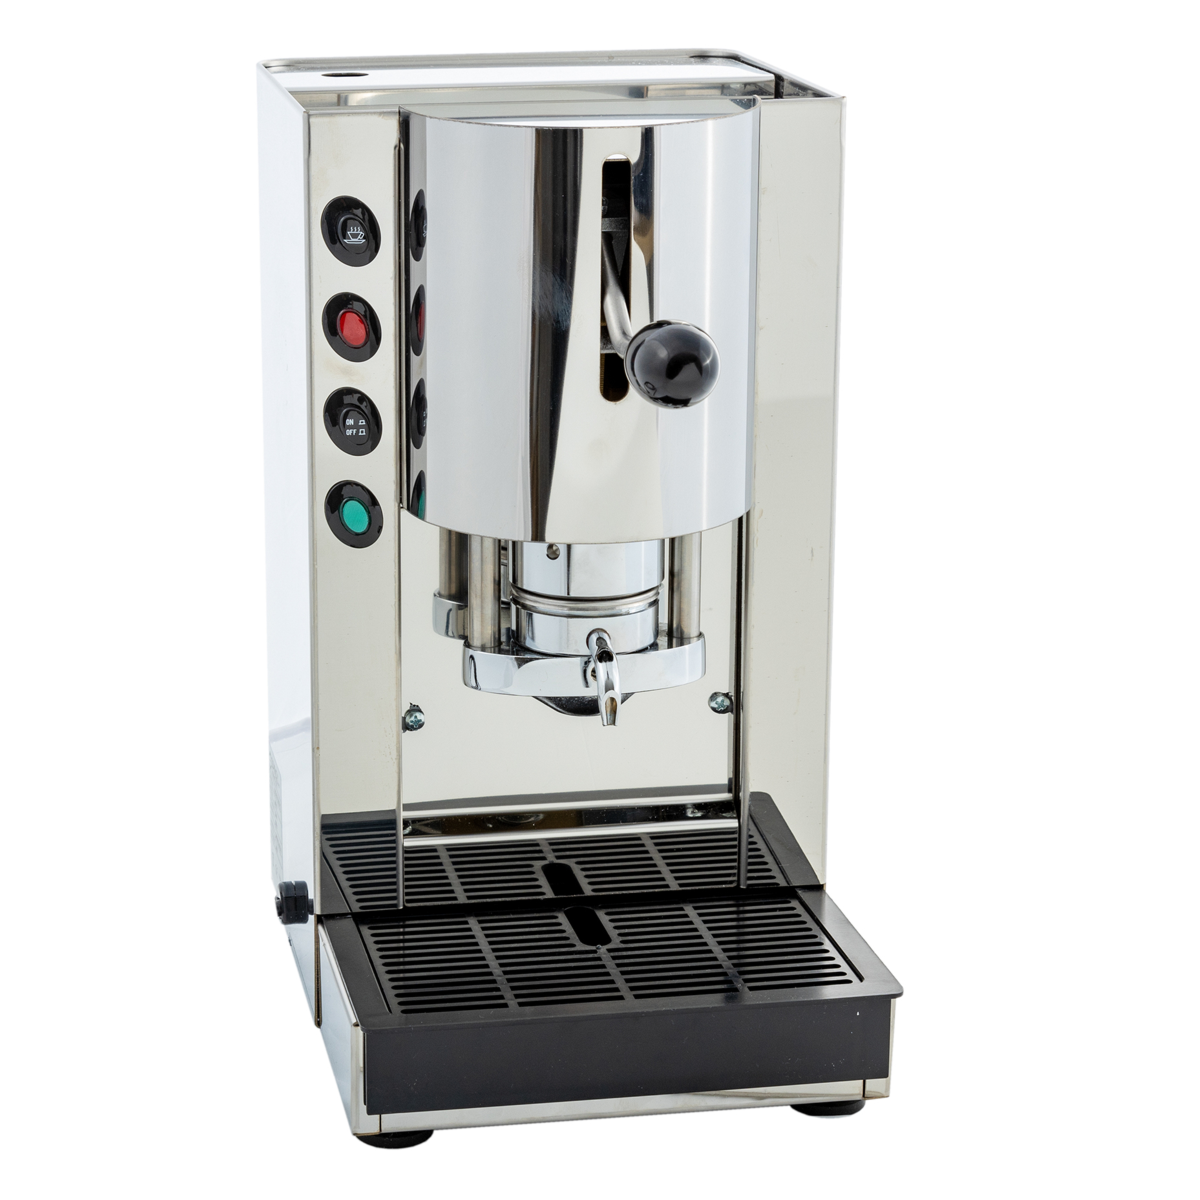 Machine à café expresso dosettes ESE marque Cardoso modèle Tube